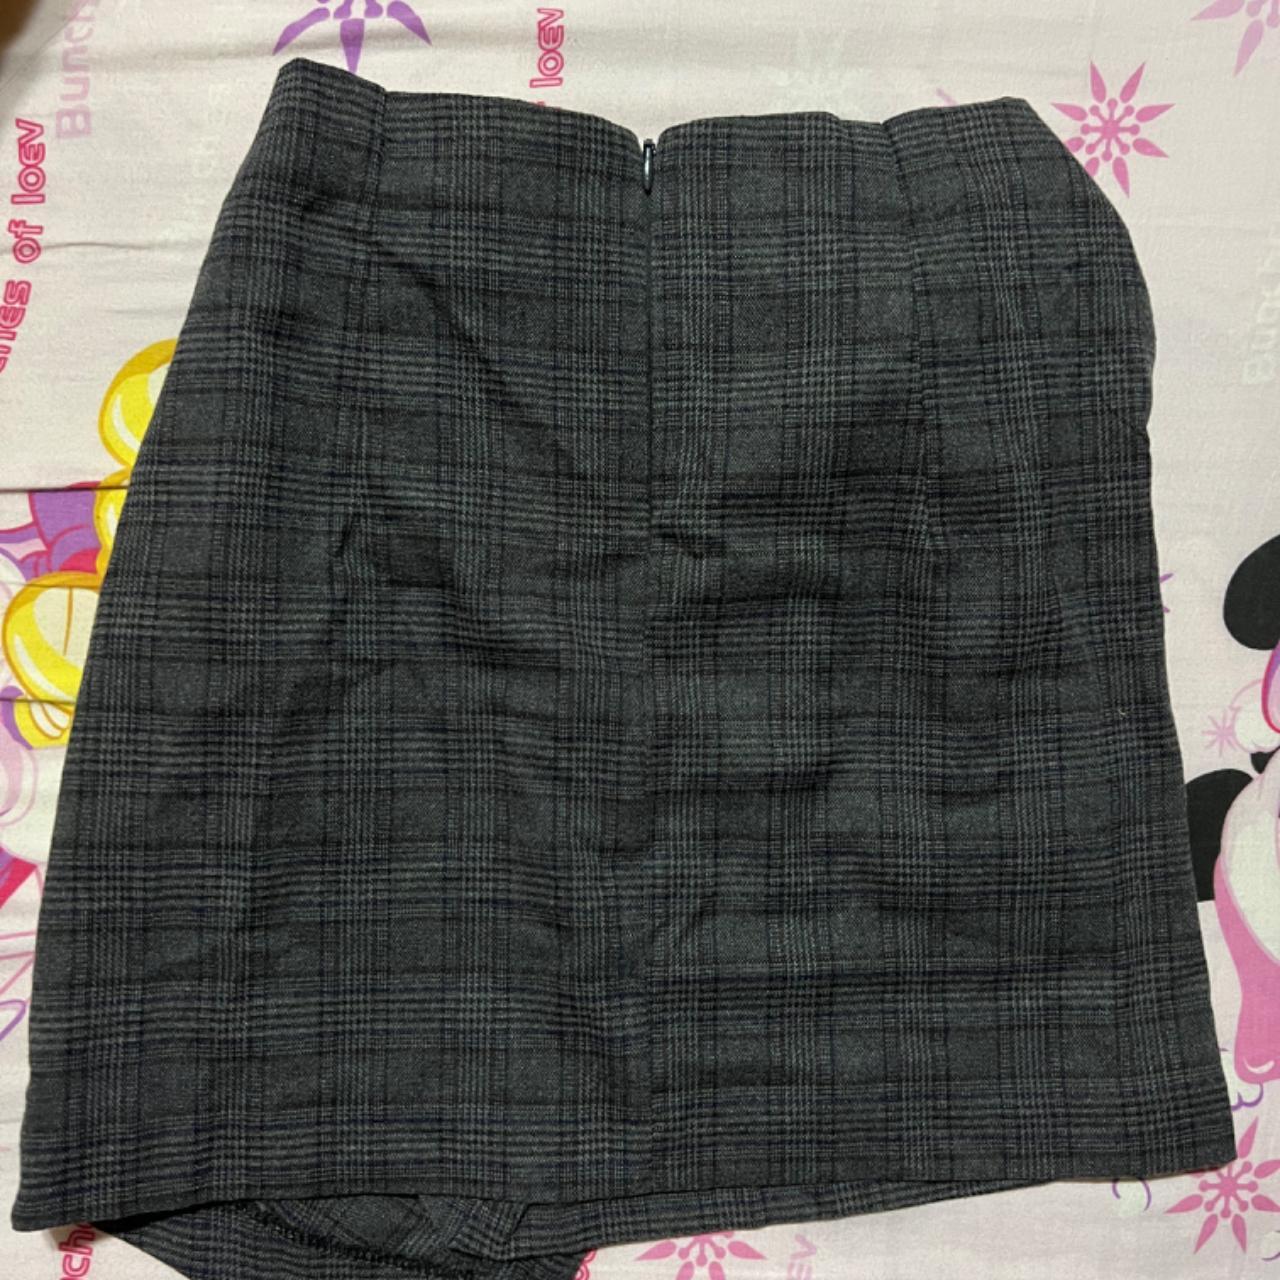 Product Image 3 - Stylenanda Plaid Skirt

Plaid skirt for